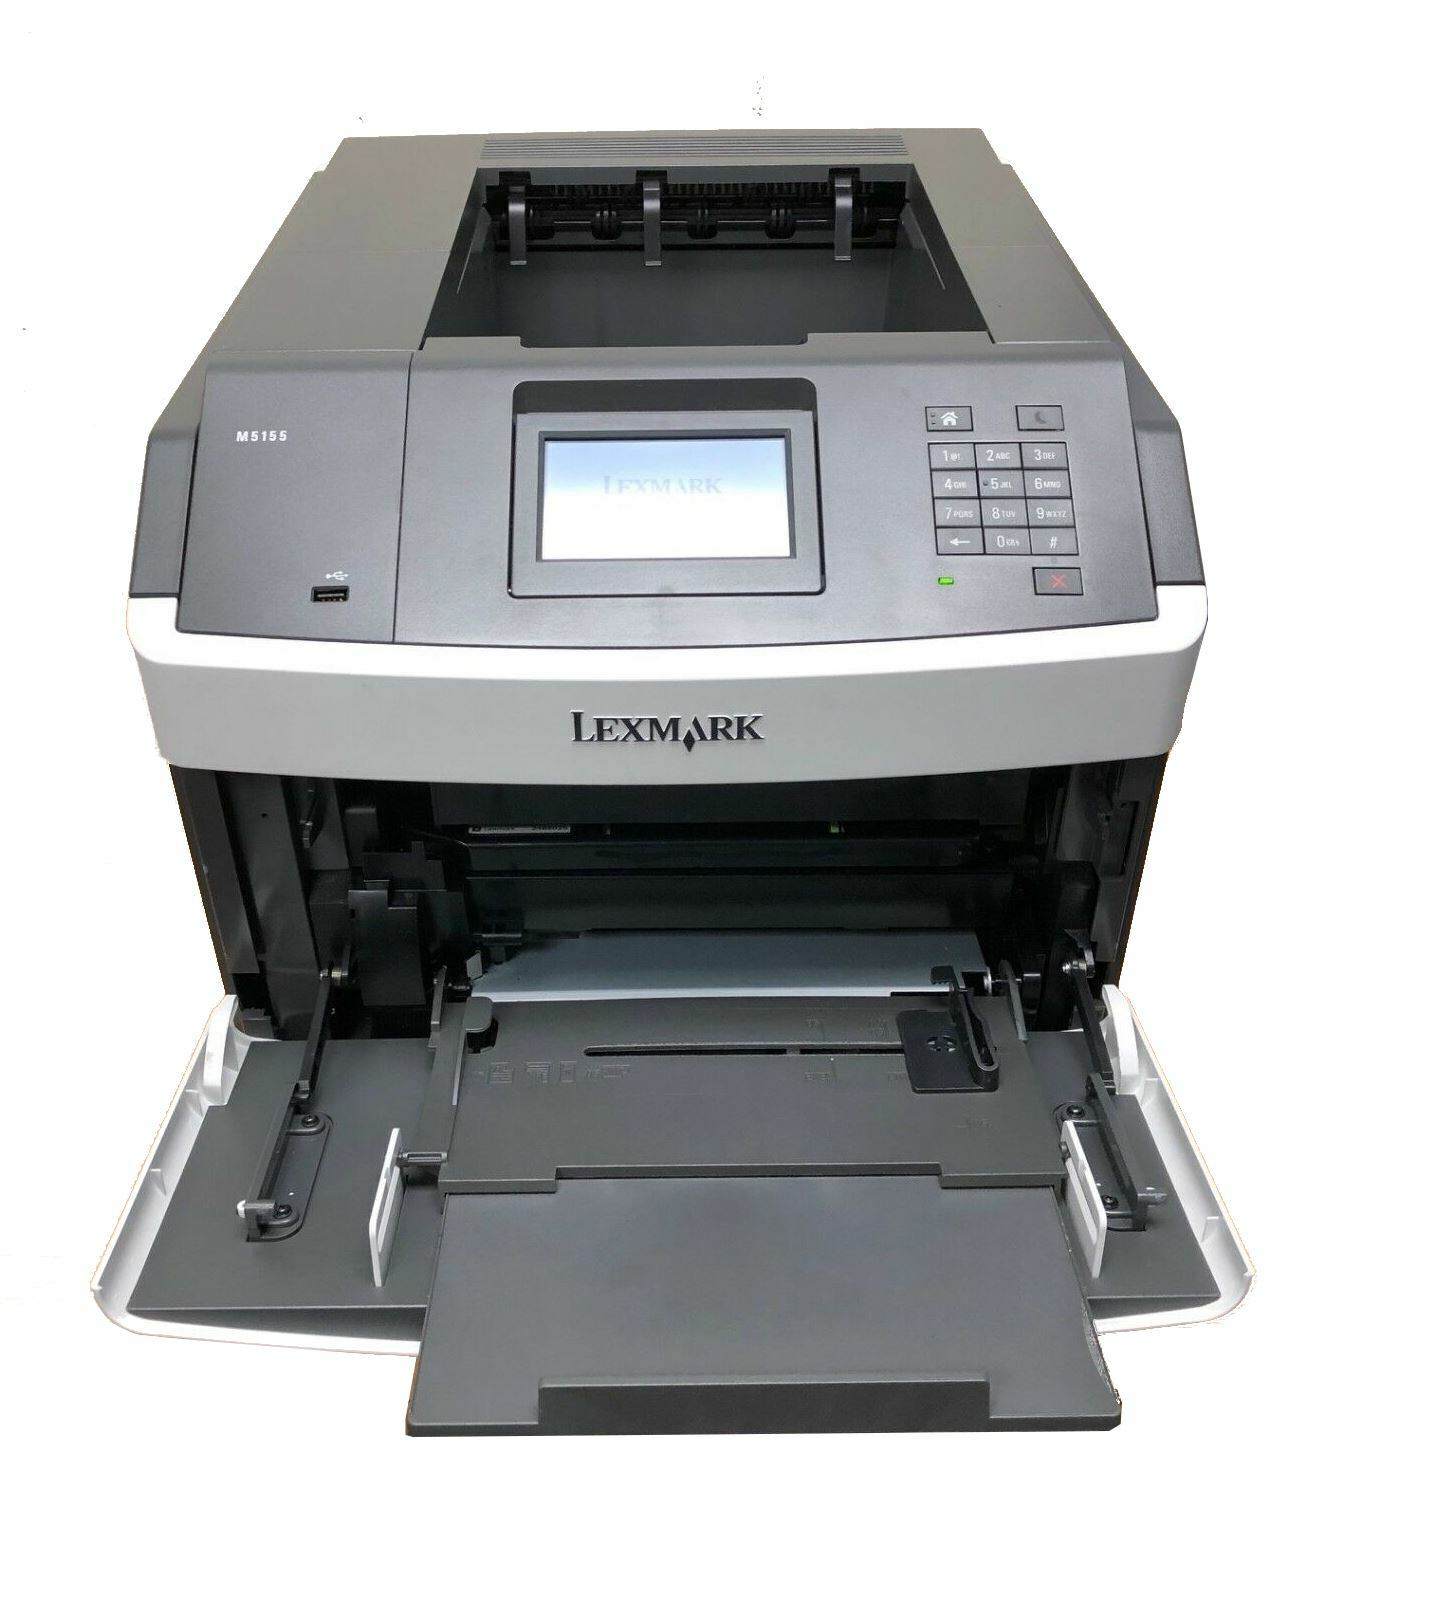 Genuine Lexmark M5155 Black & White Monochrome Laser Printer 40G0720